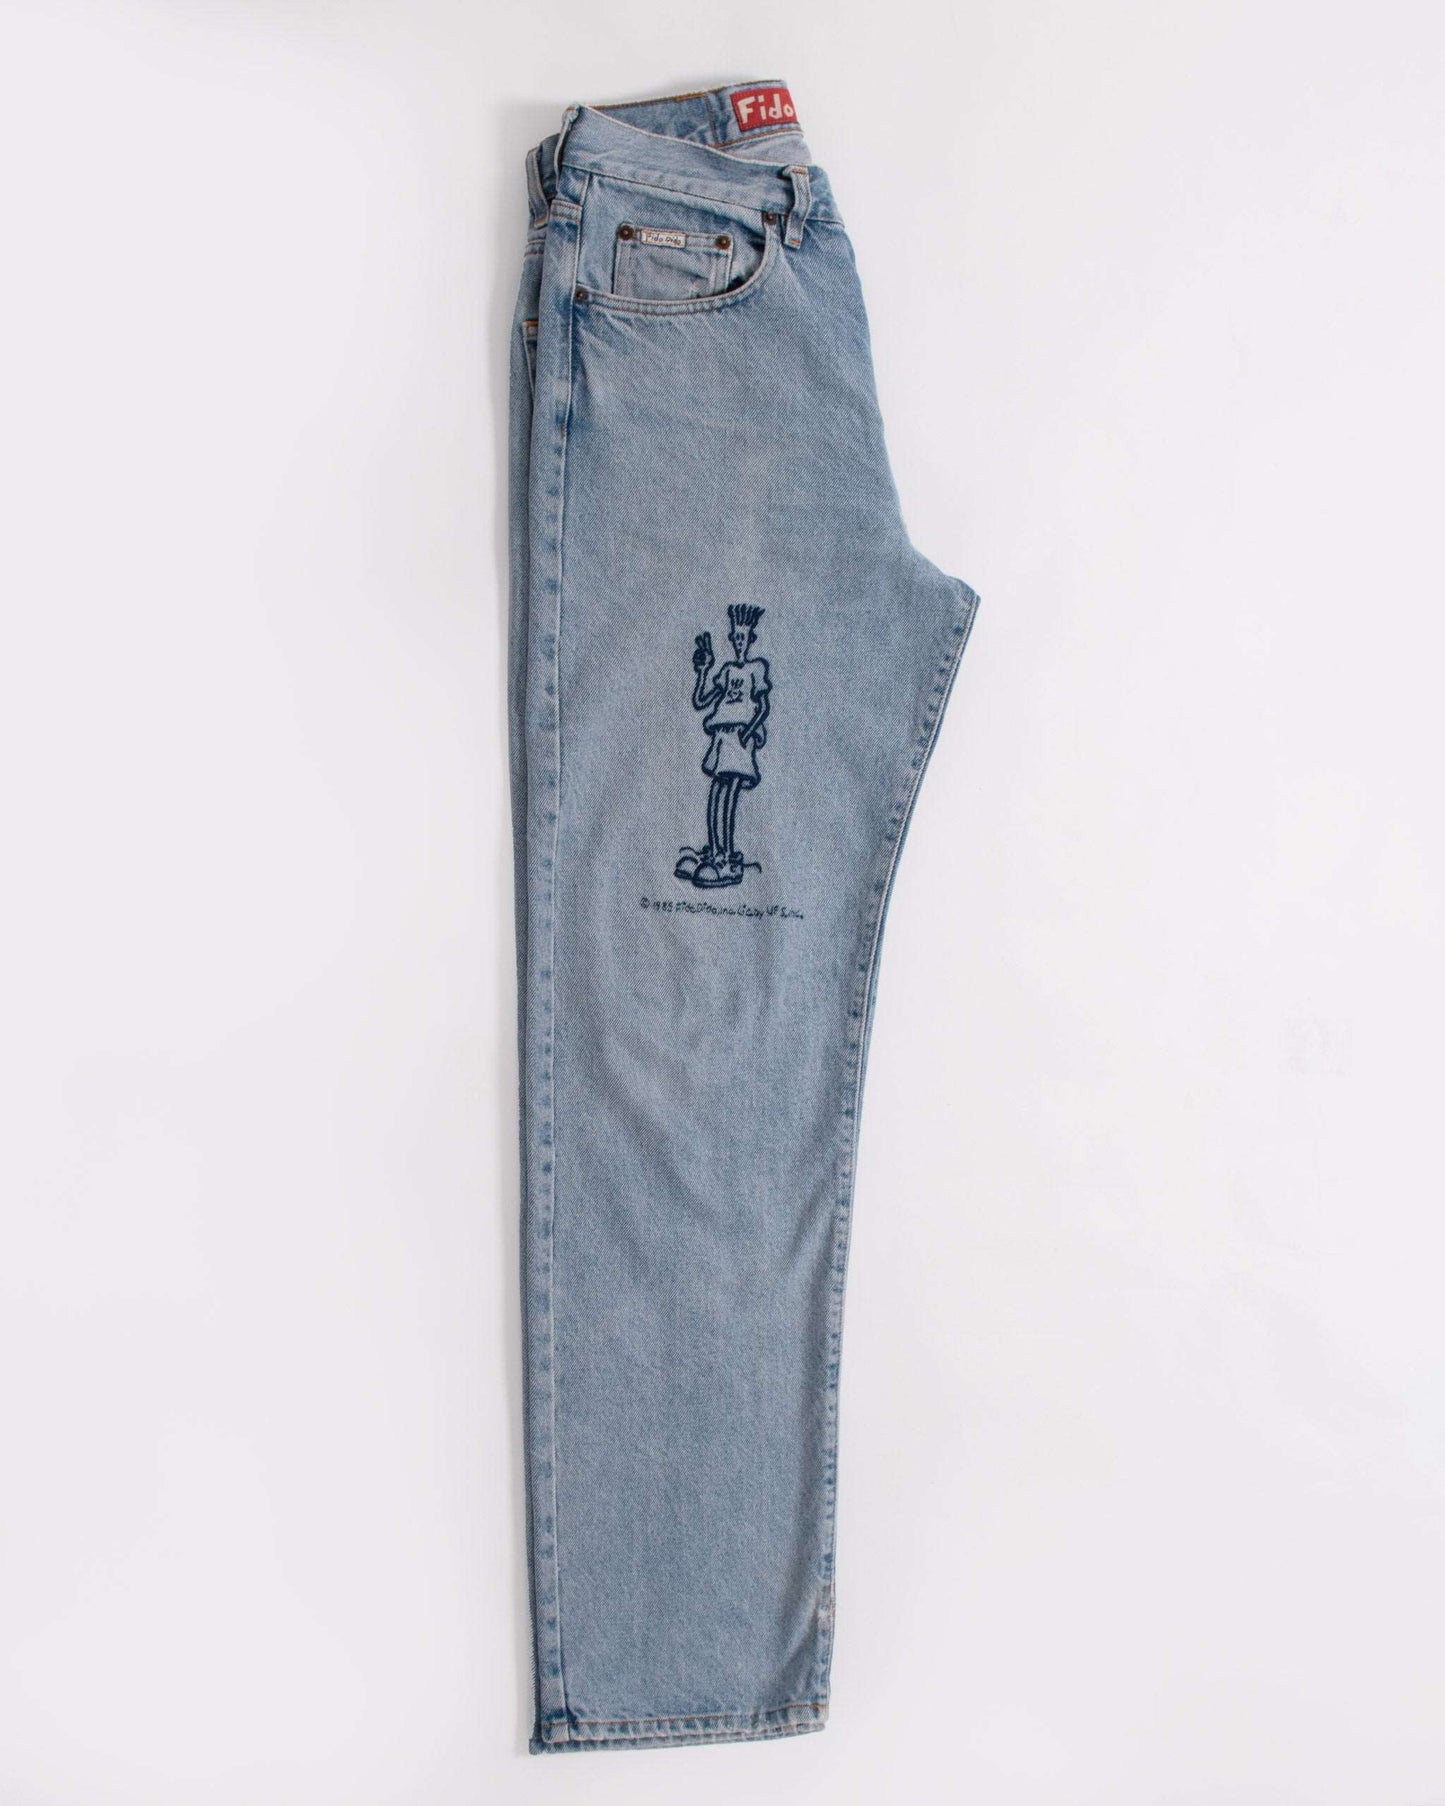 Vintage Fido Dido denim blue jeans